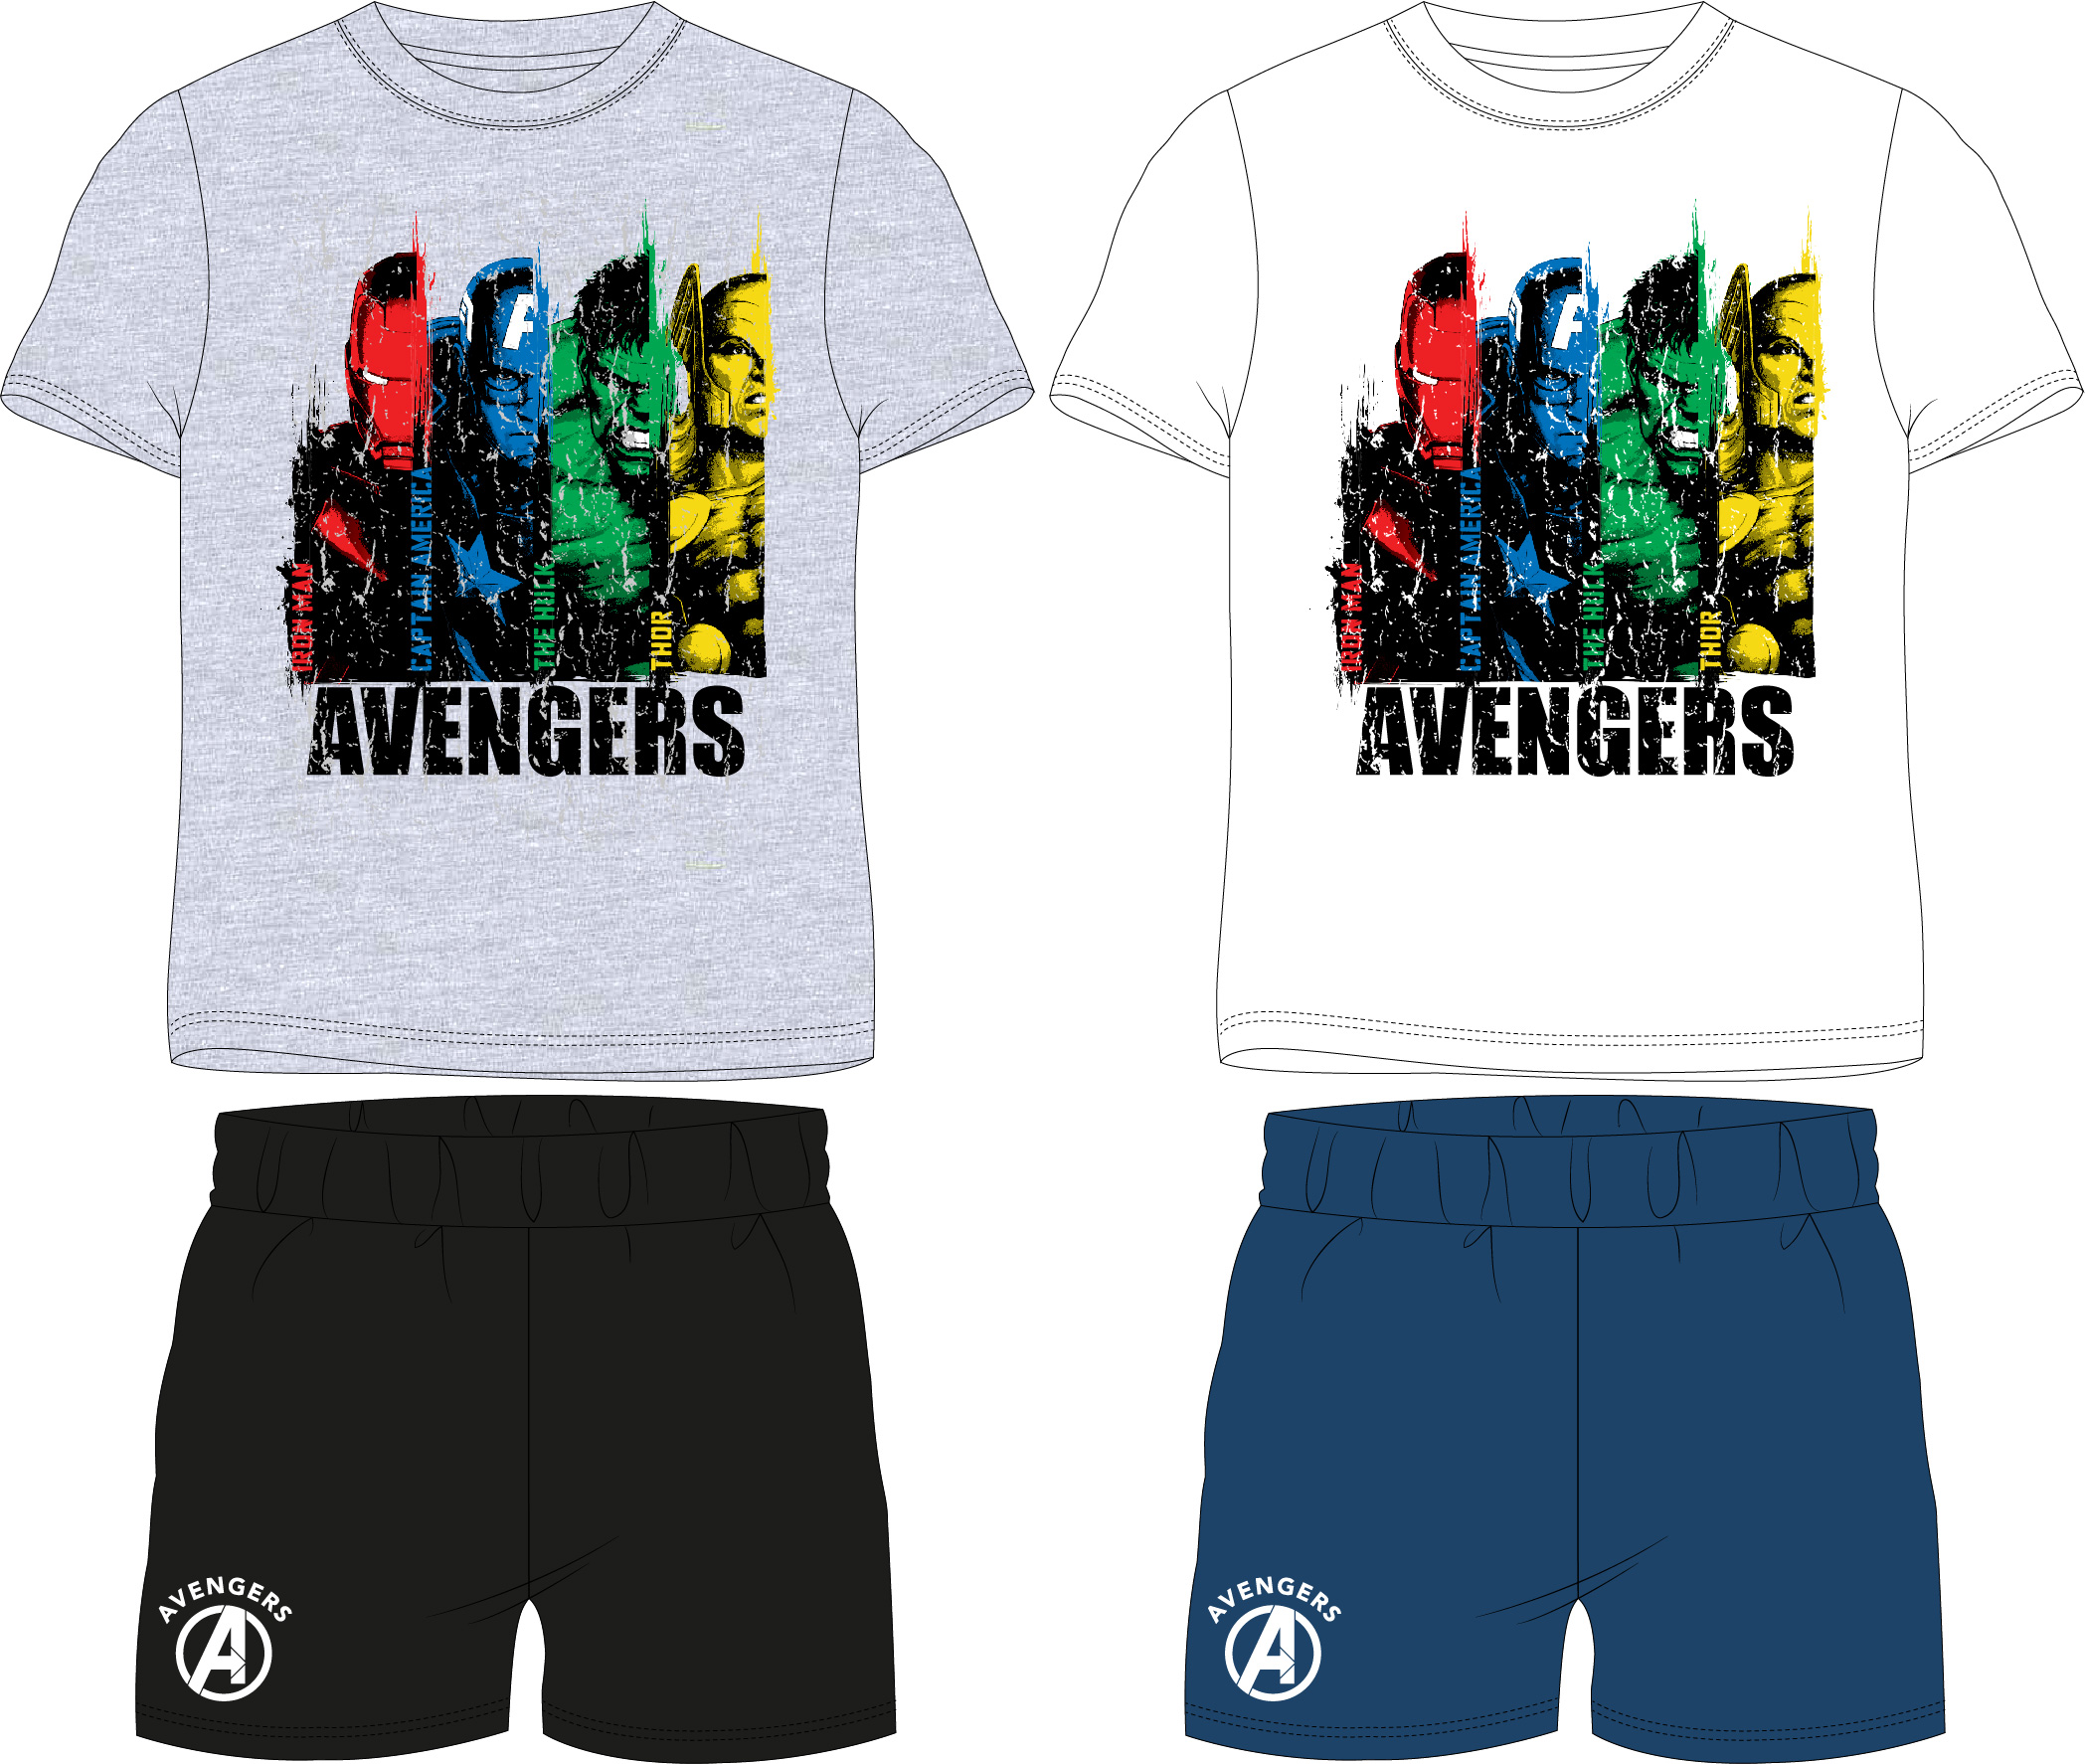 Avangers - licence Chlapecké pyžamo - Avengers 5204438, šedá / černá Barva: Šedá, Velikost: 158-164